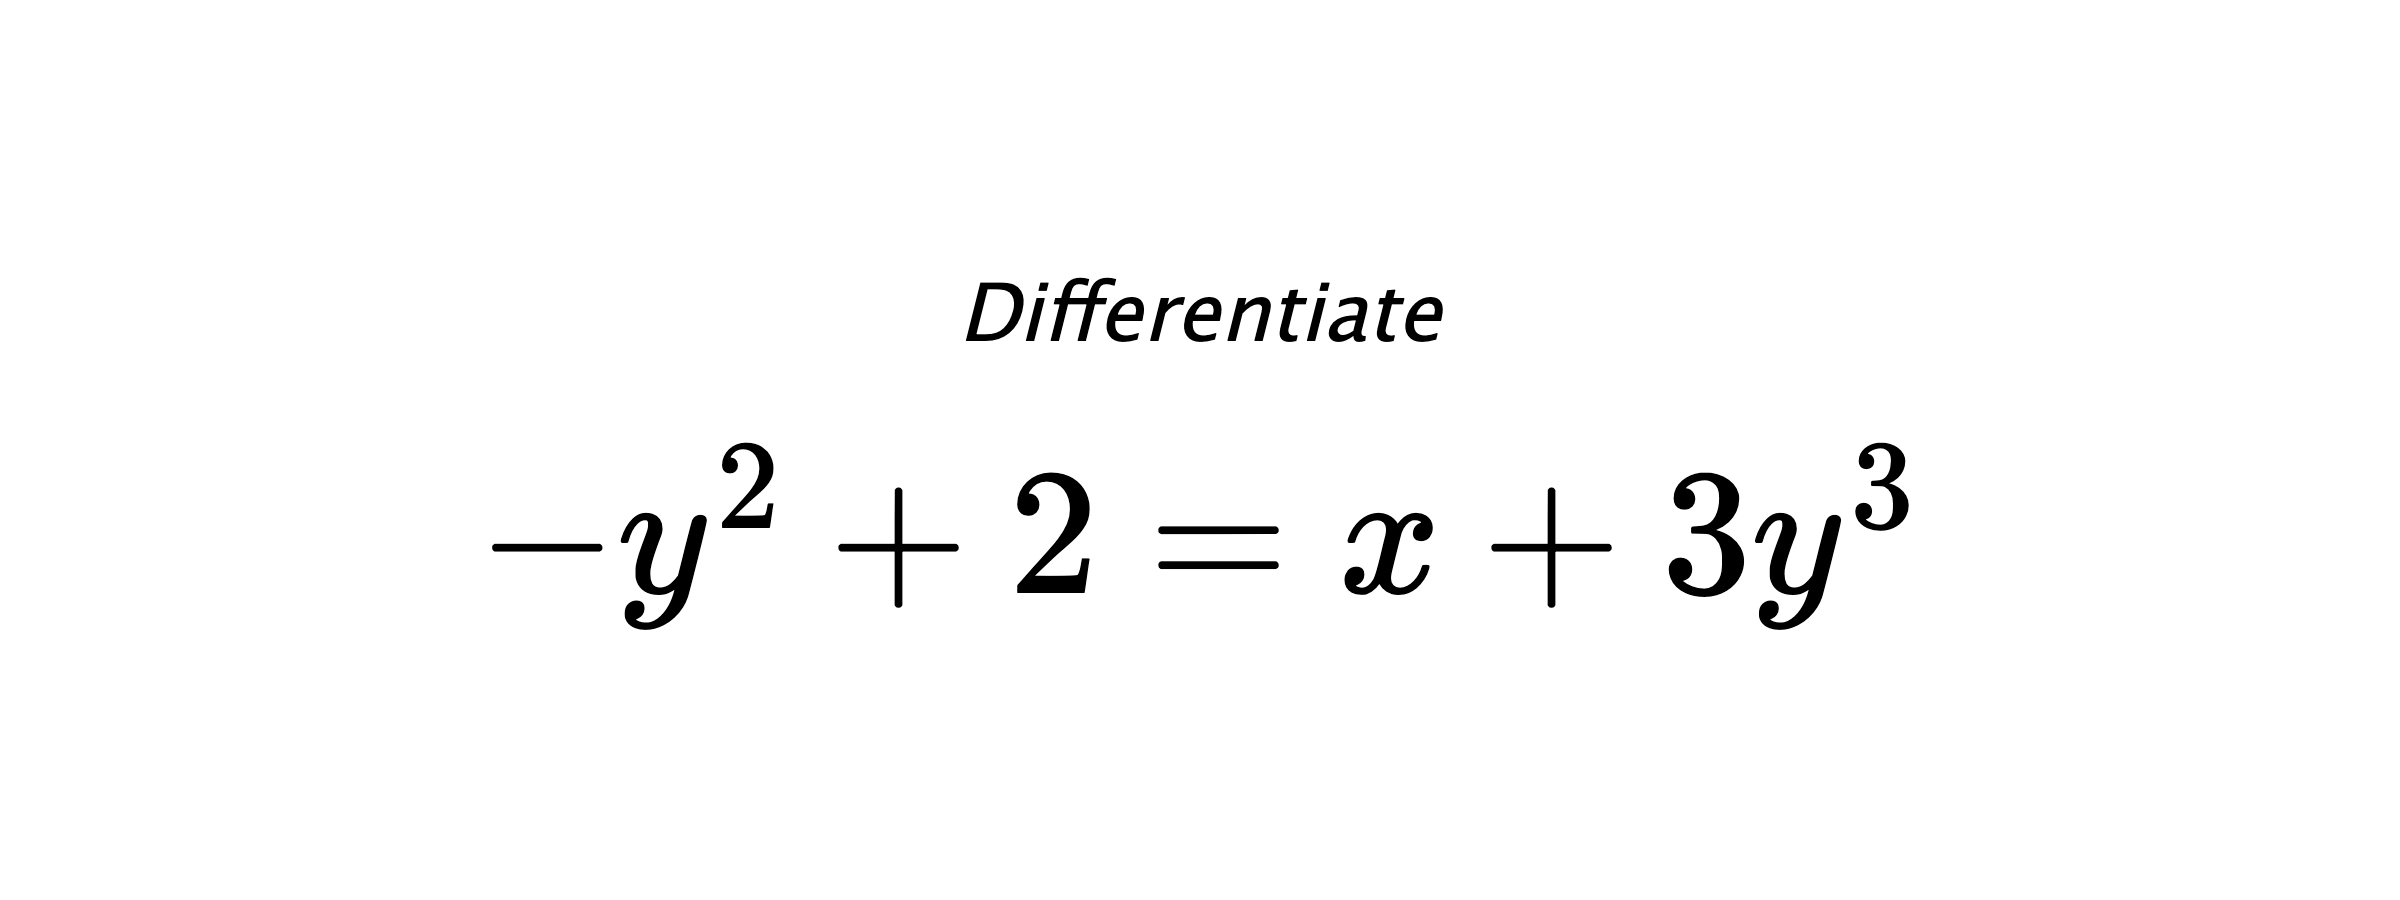 Differentiate $ -y^2+2 = x+3y^3 $